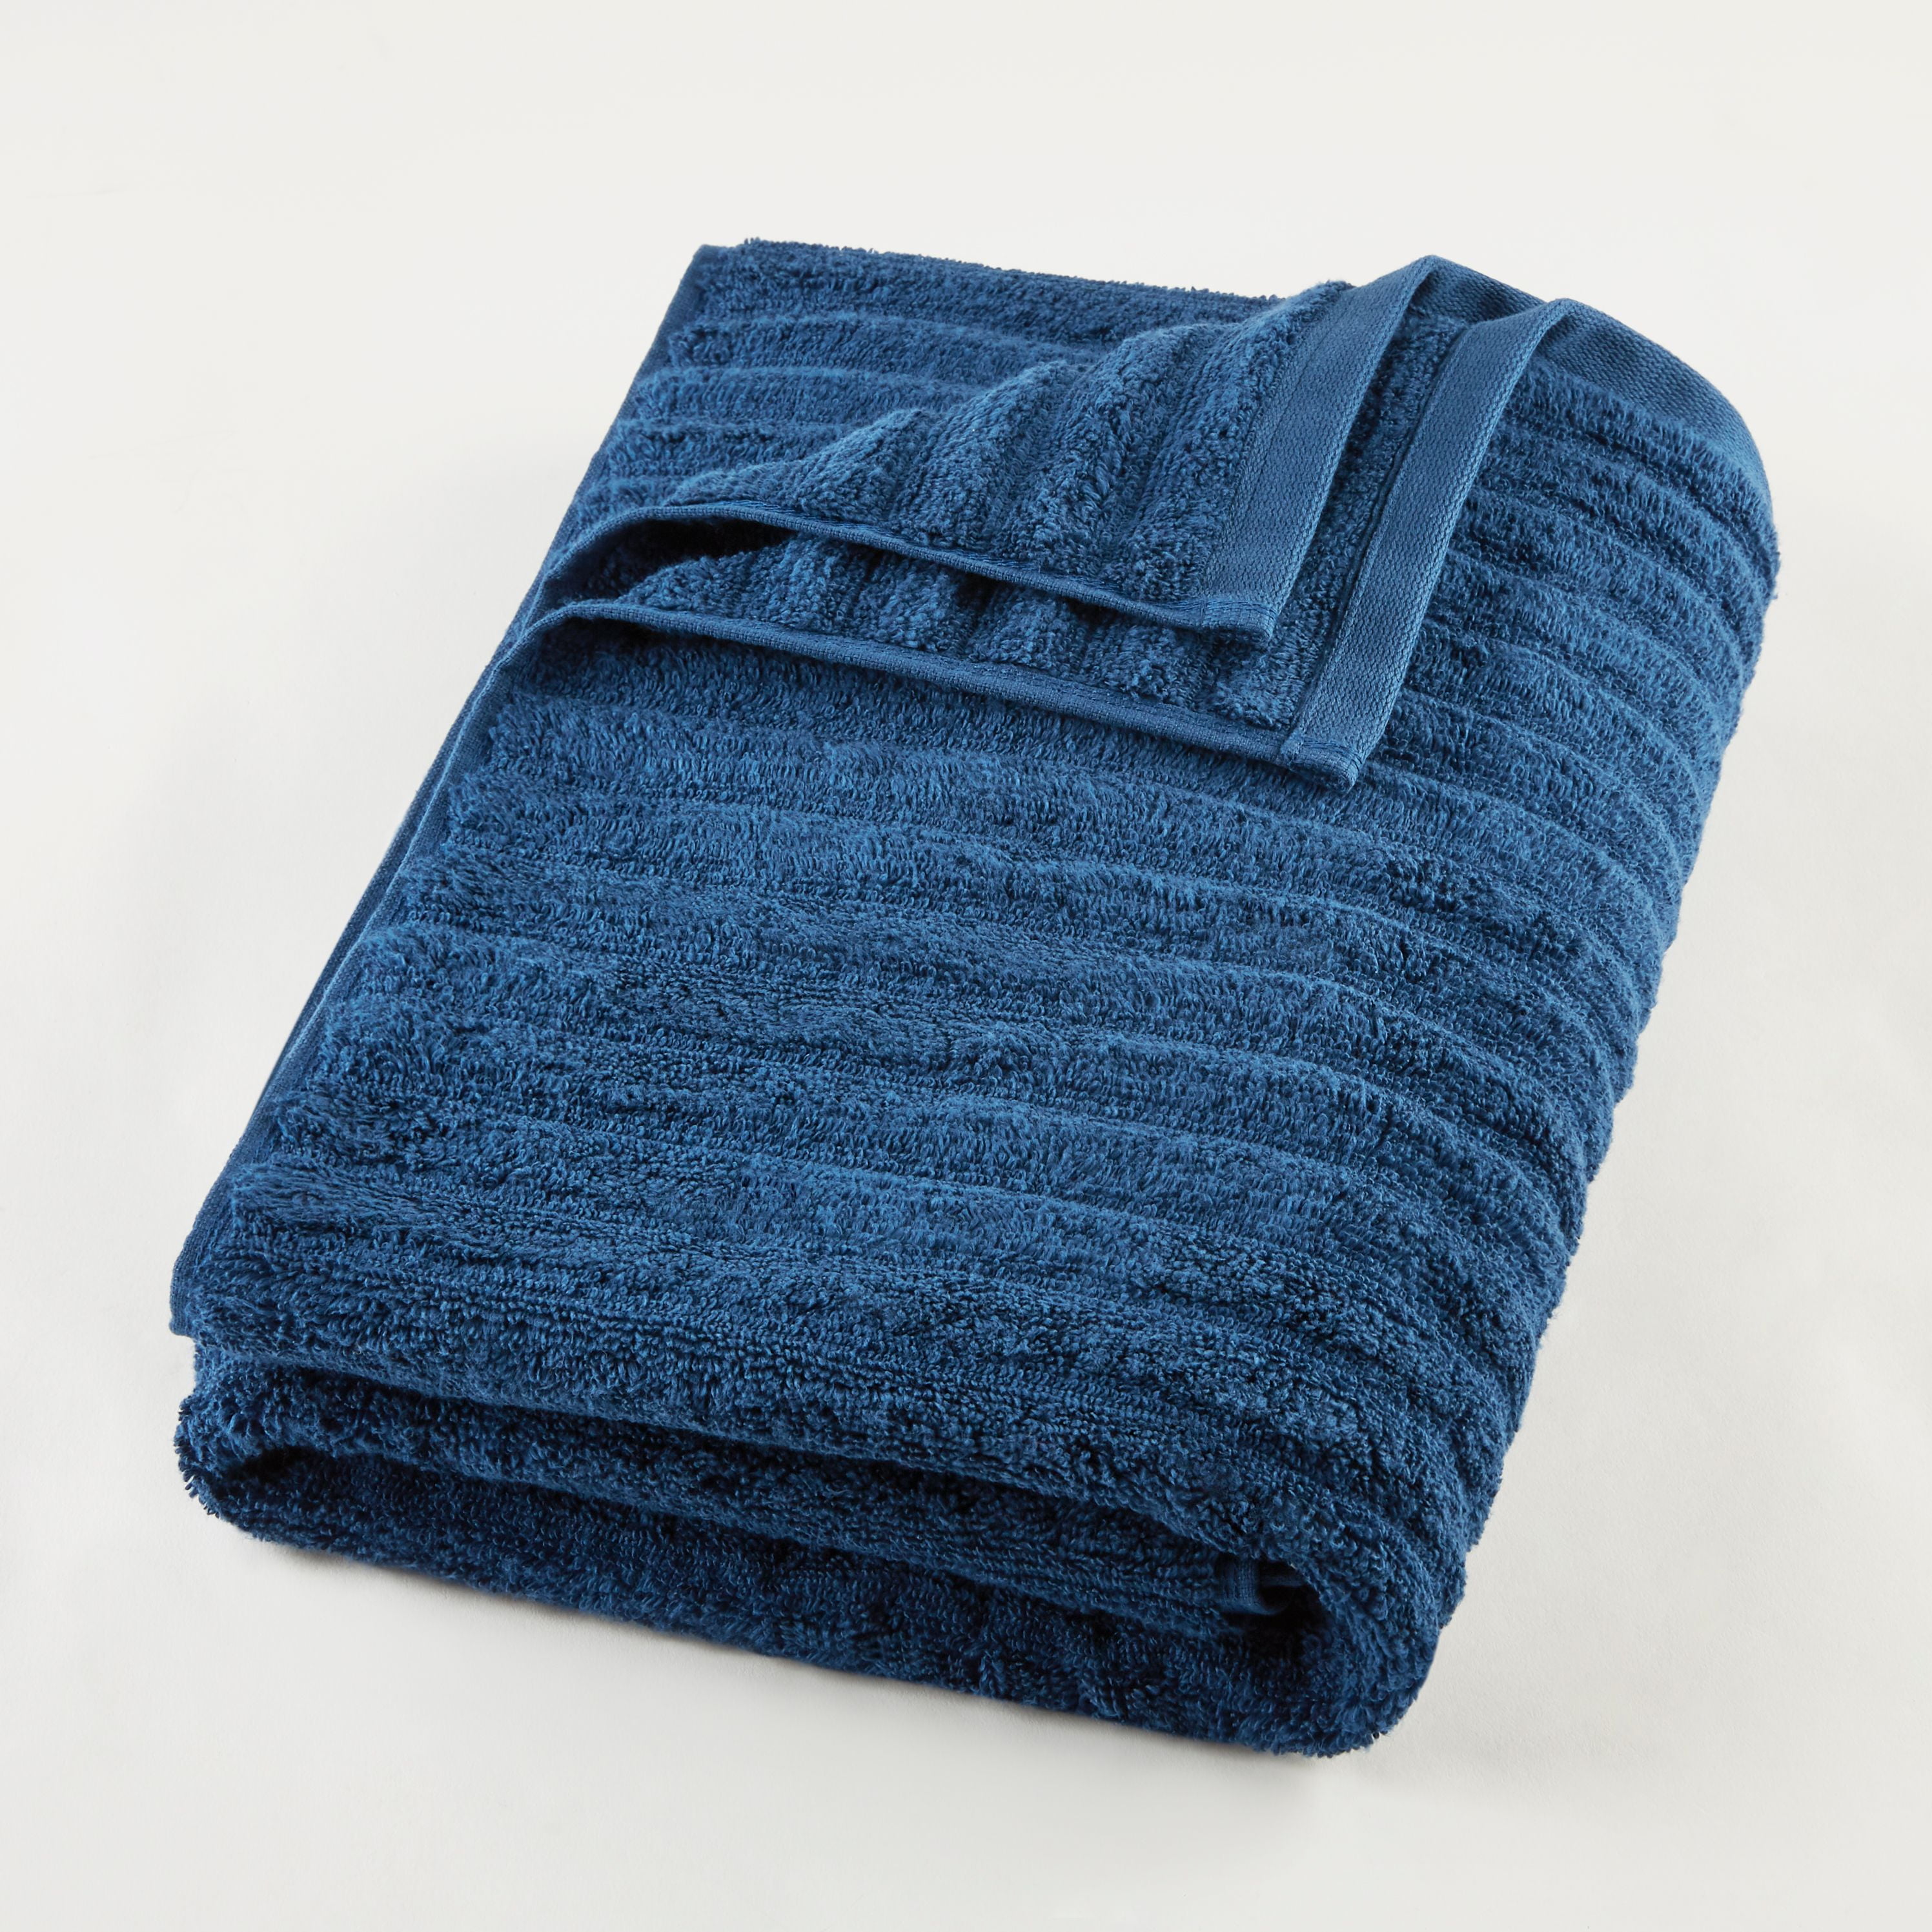 Mainstays Textured Performance Cotton Bath Sheet Towel - 2 ...